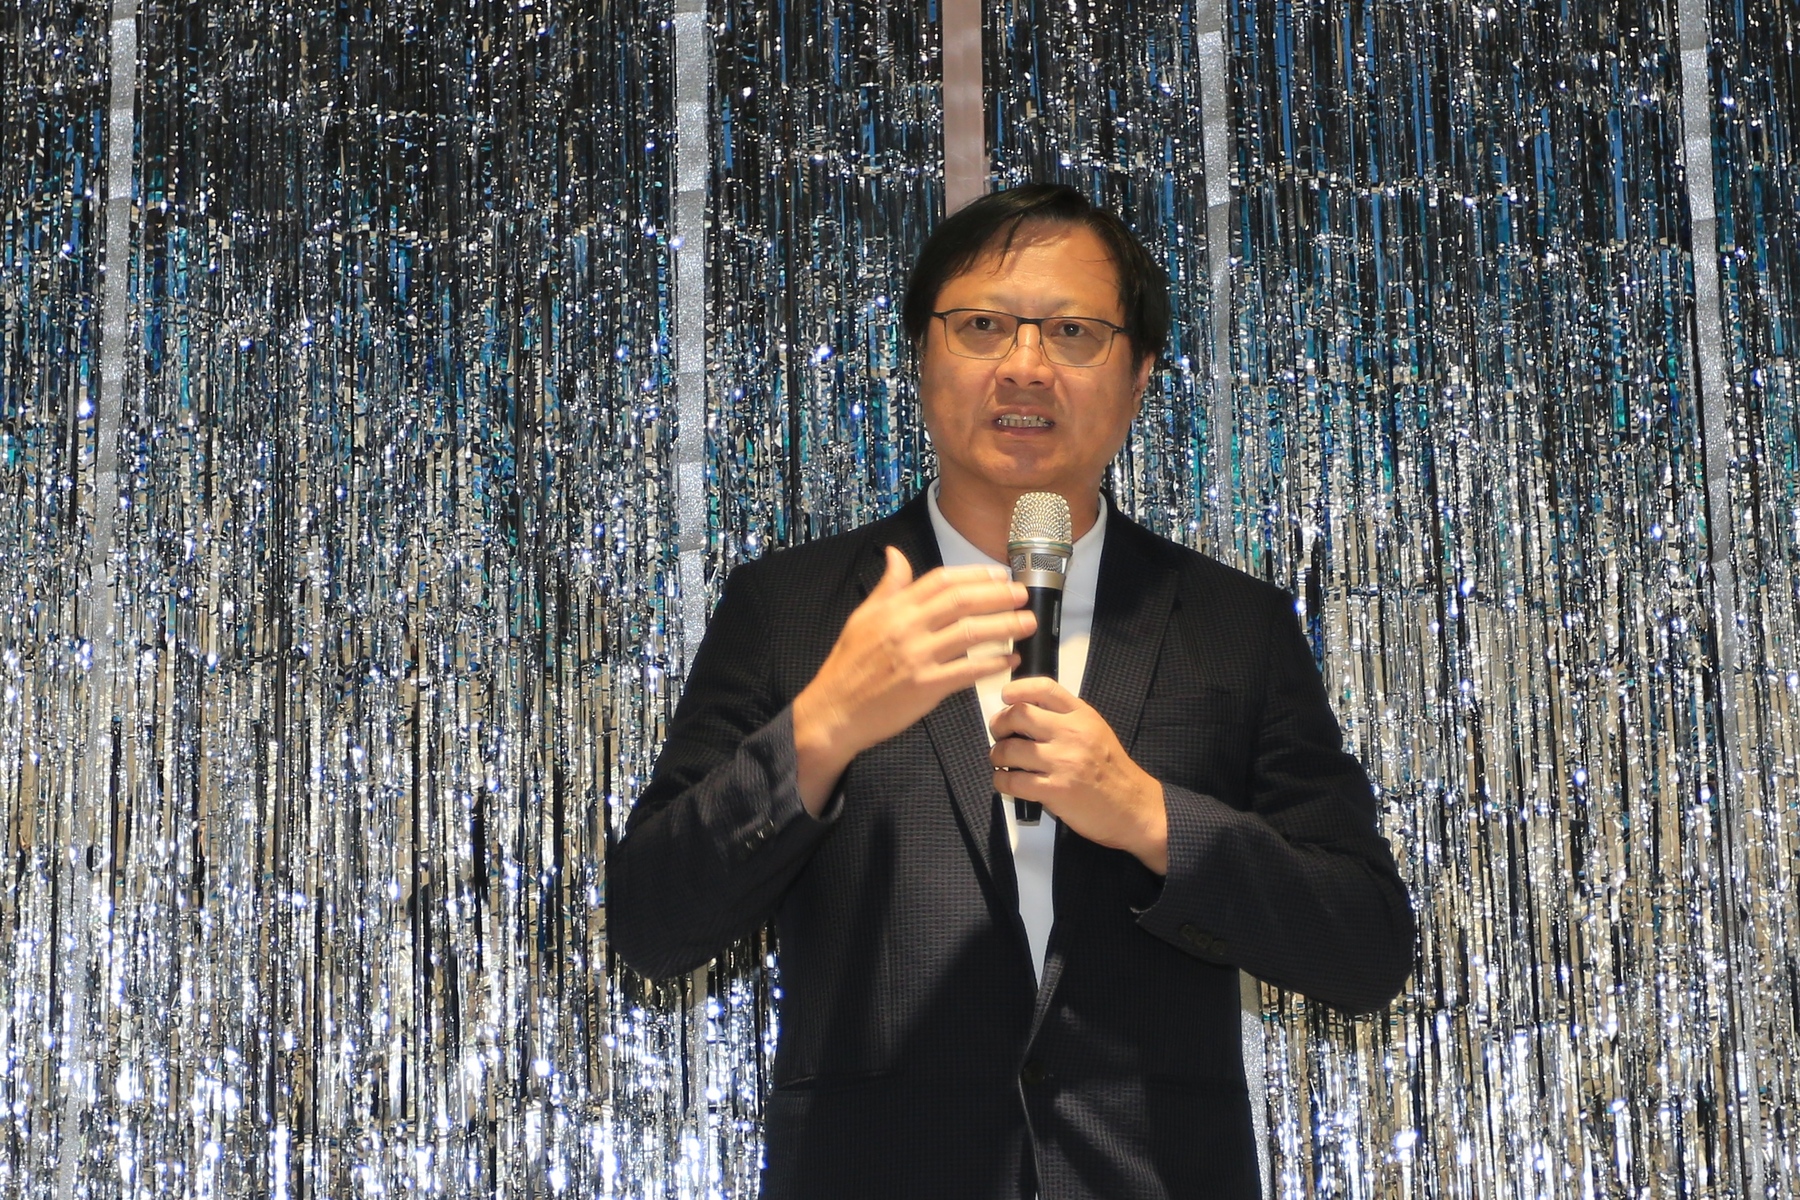 Chung-hui Huang, President of the NSYSU Alumni Association, presented his greetings.